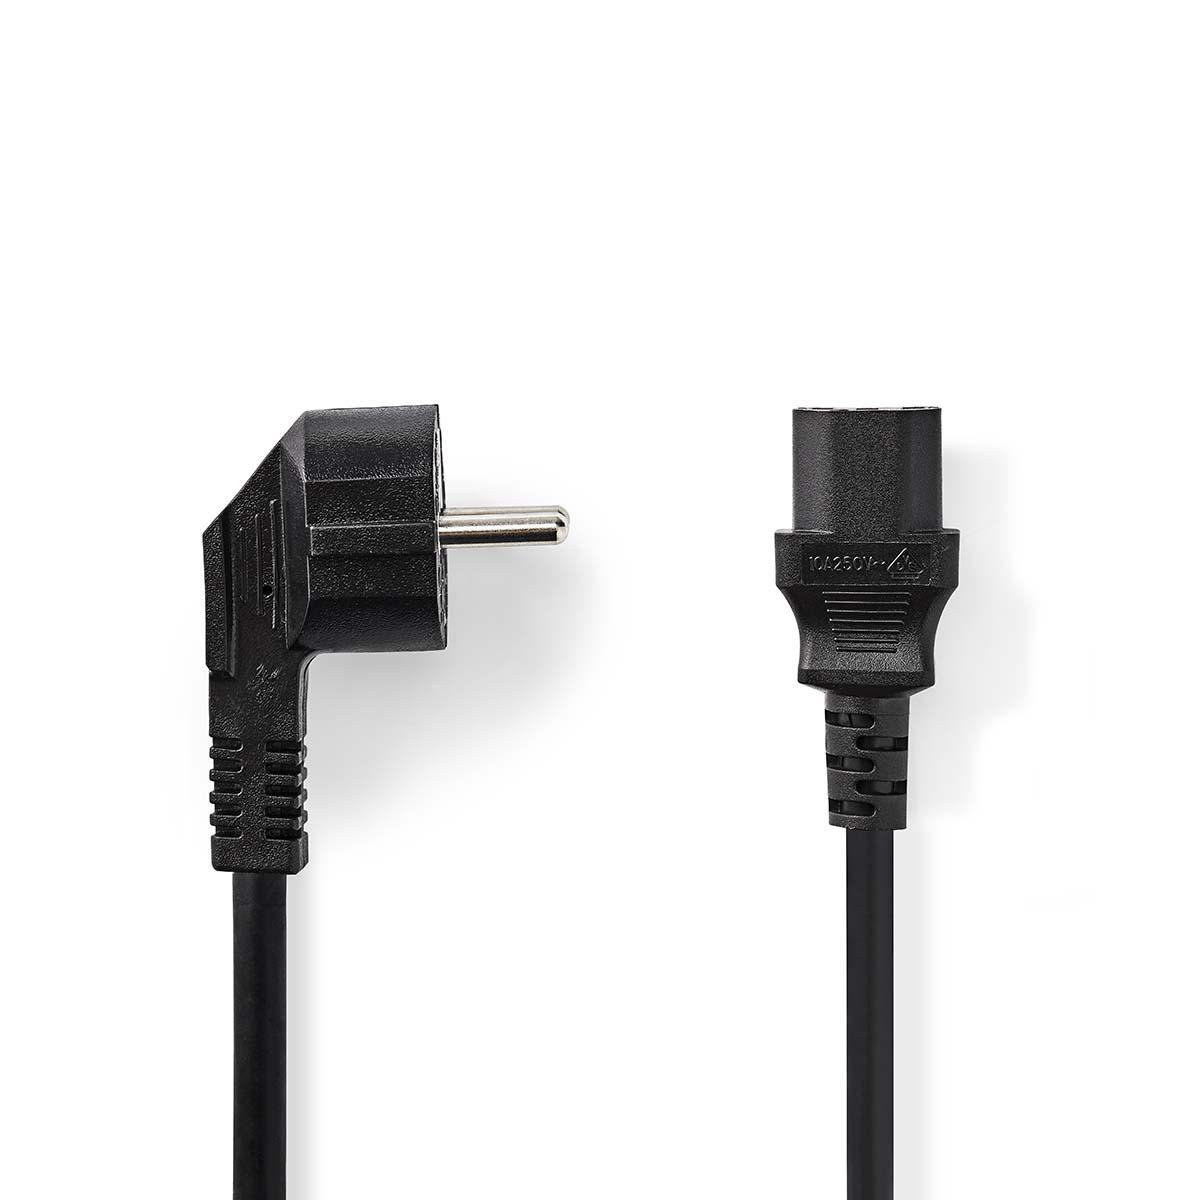 Nedis napájecí kabel zástrčka UNISCHUKO - IEC-320-C13 černá, 3 m (CEGP10015BK30)